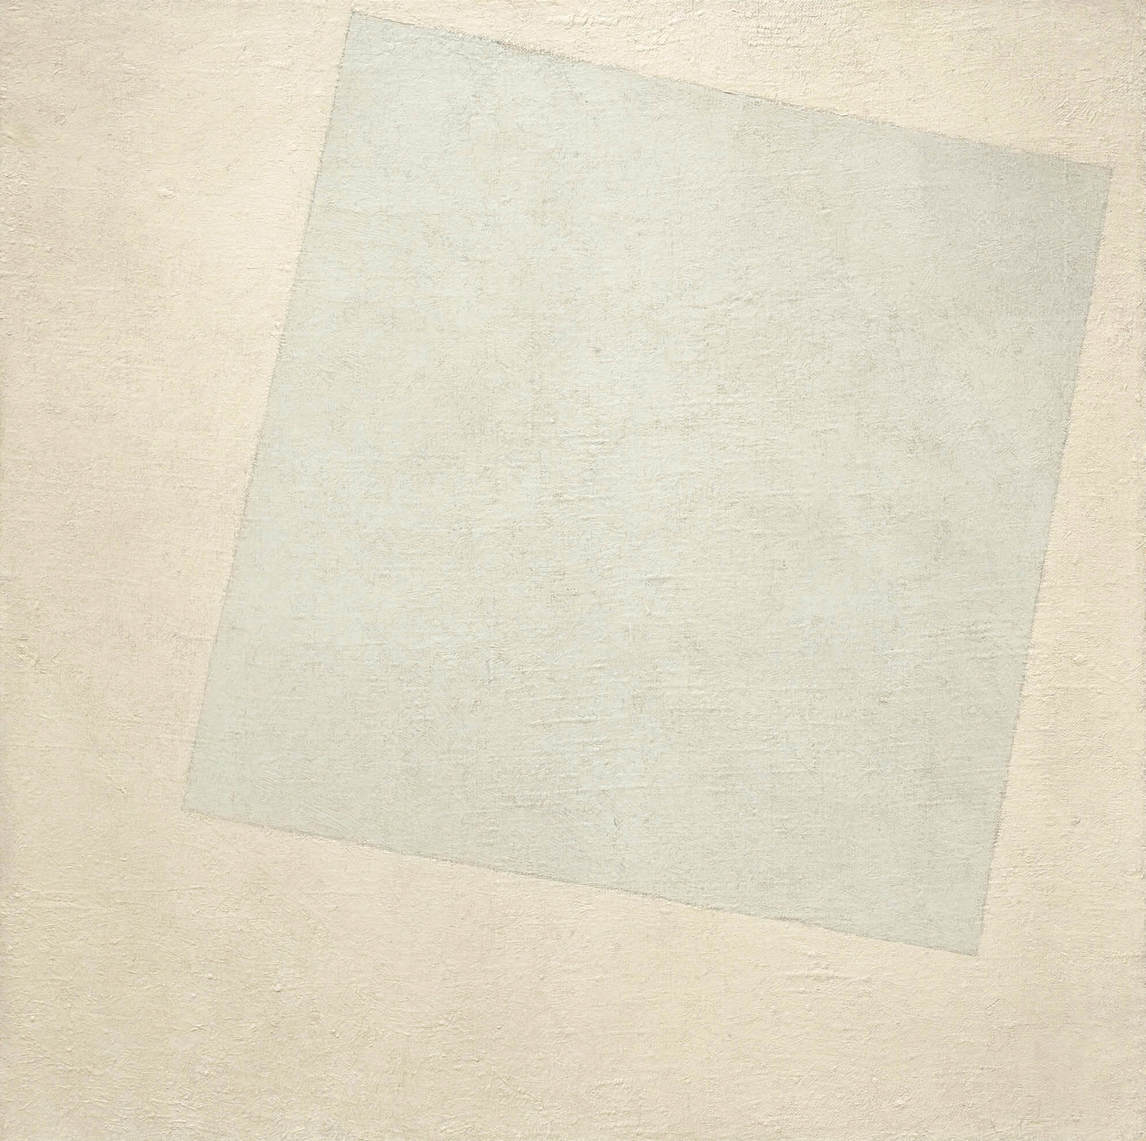 White on White, 1918, by Kazimir Malevich